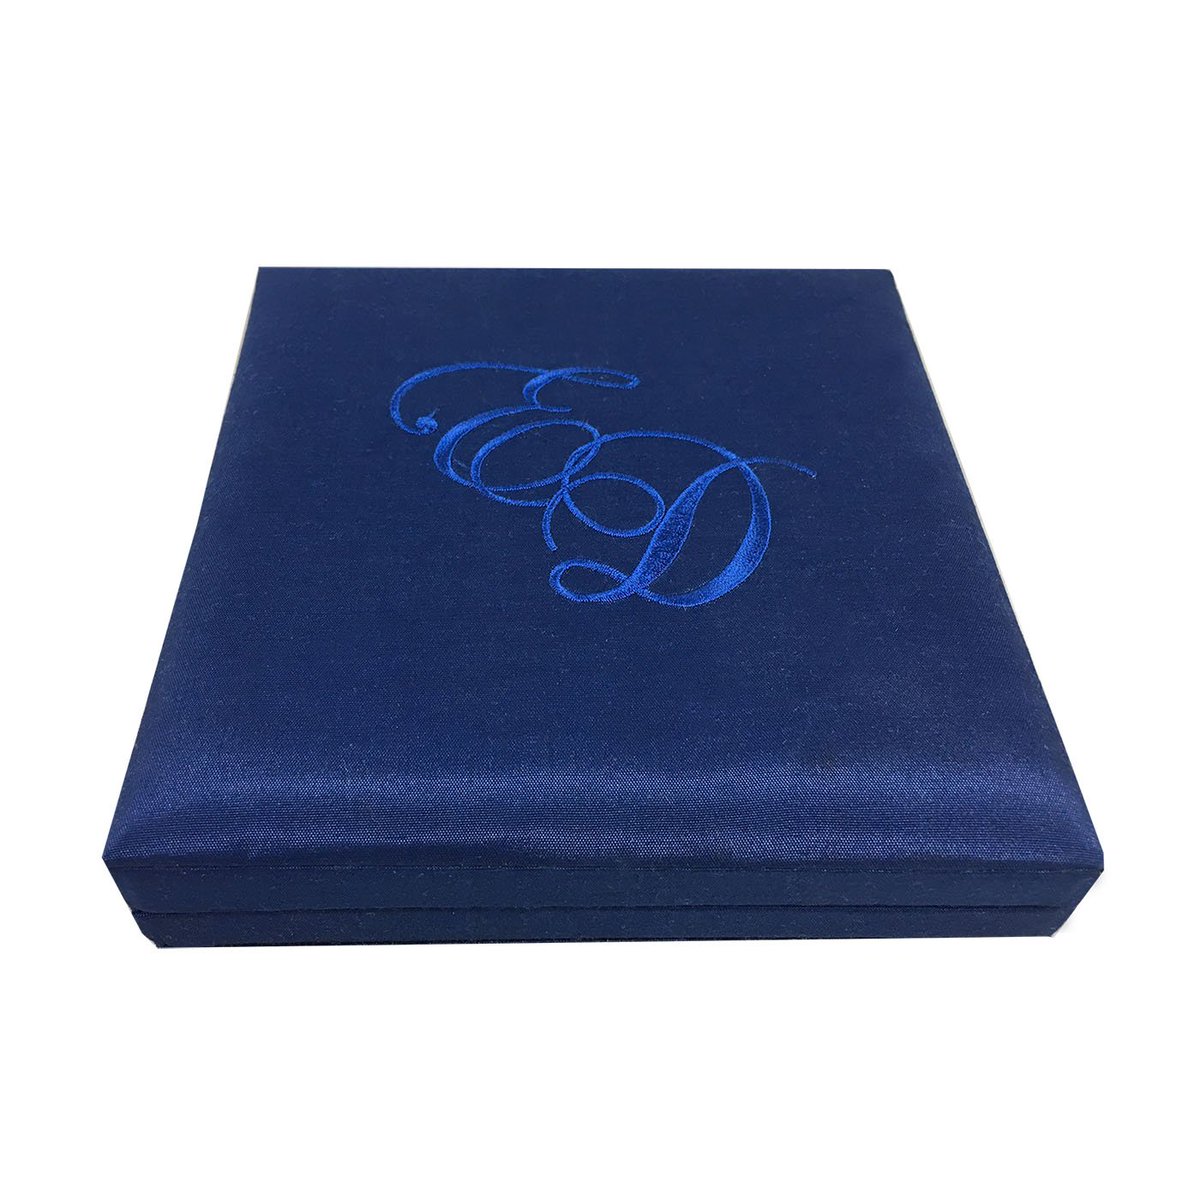 Monogram Embroidered Royal Blue Square Silk Wedding Invitation Box
denniswisser.com/product/monogr… #monograminvitations #weddingboxes #thaisilkbox